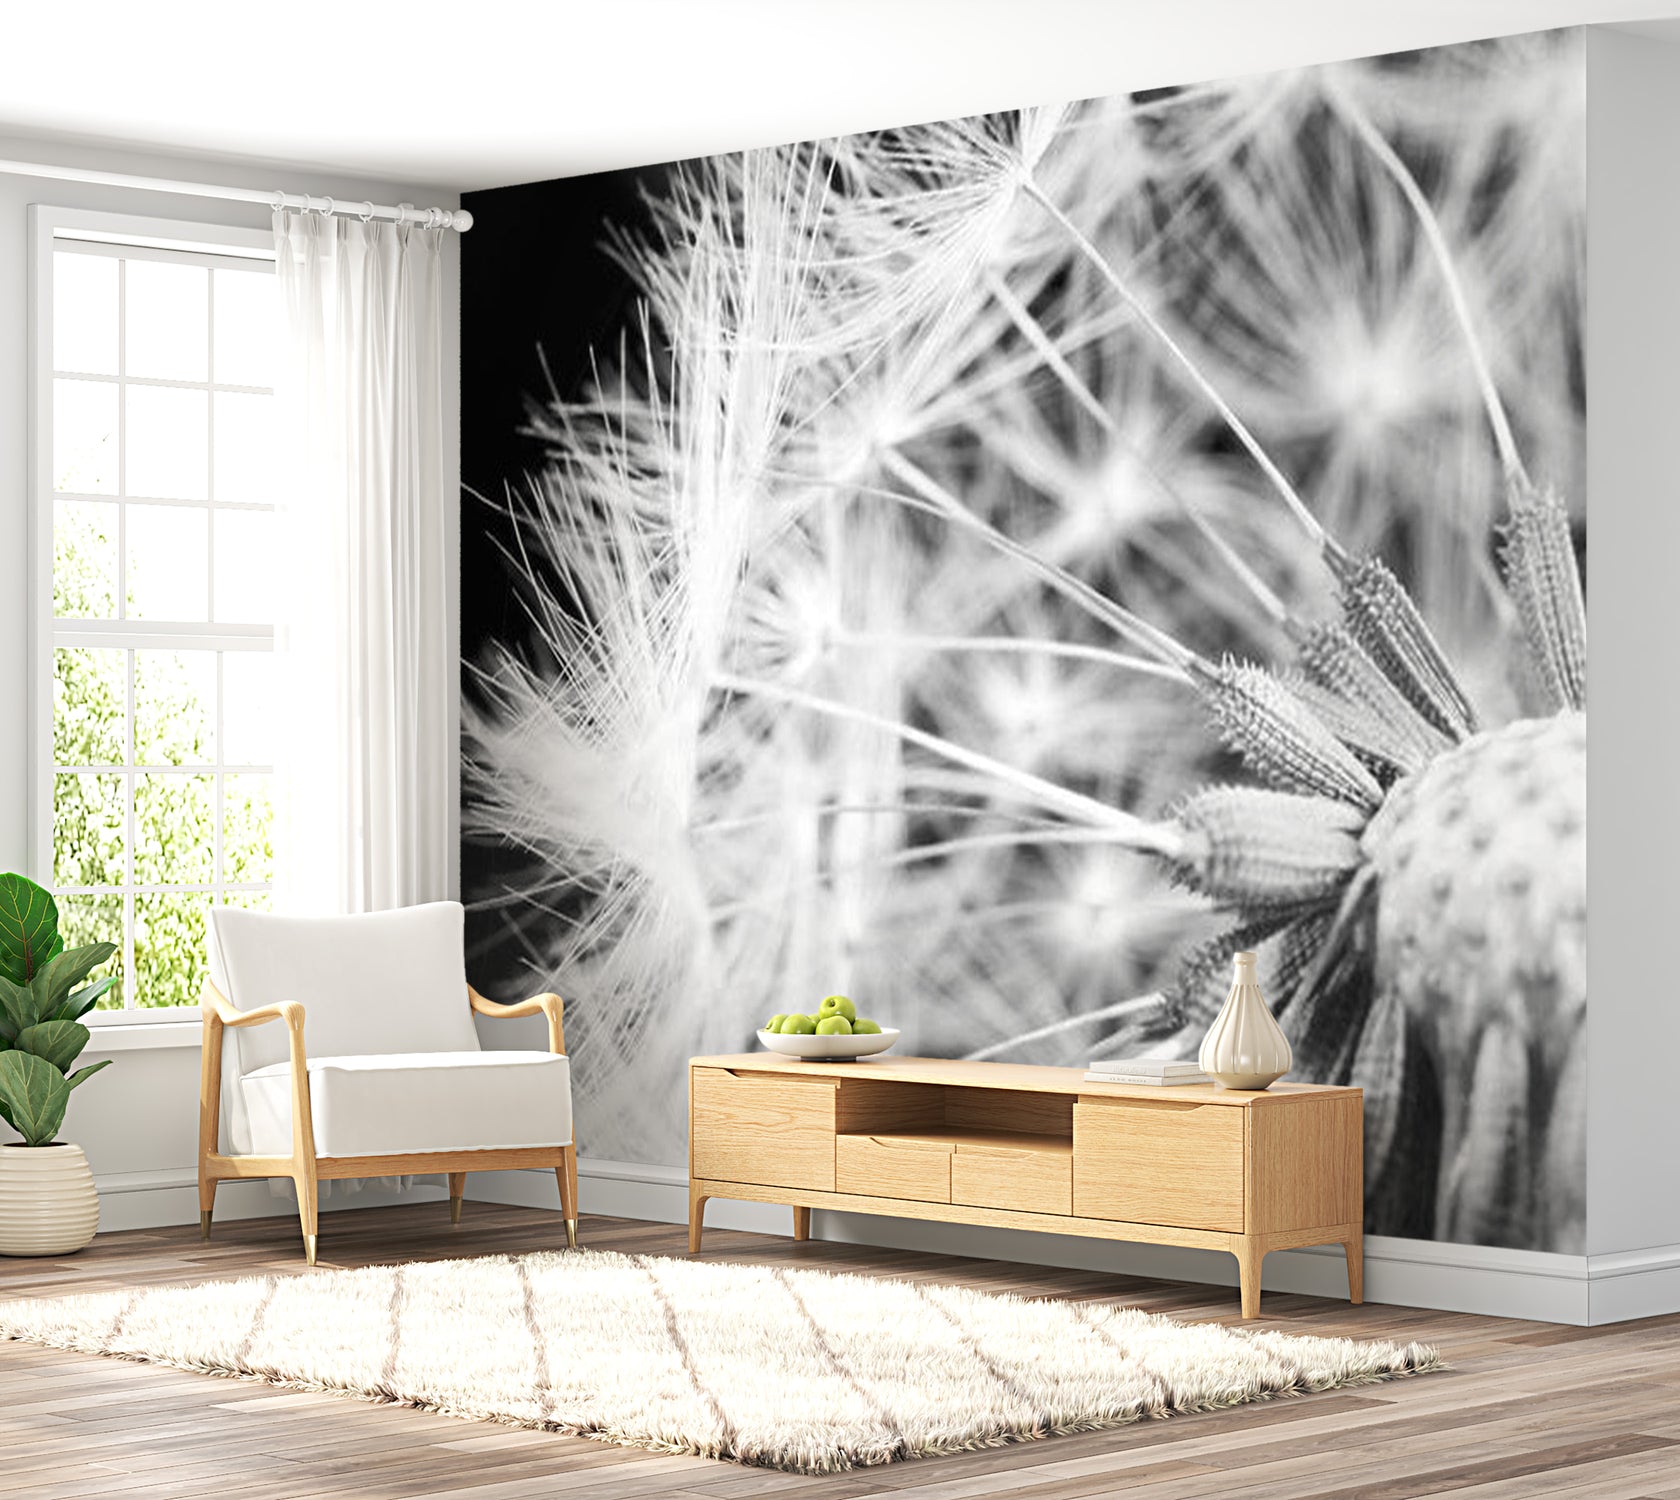 Botanical Wallpaper Wall Mural - Black And White Dandelion